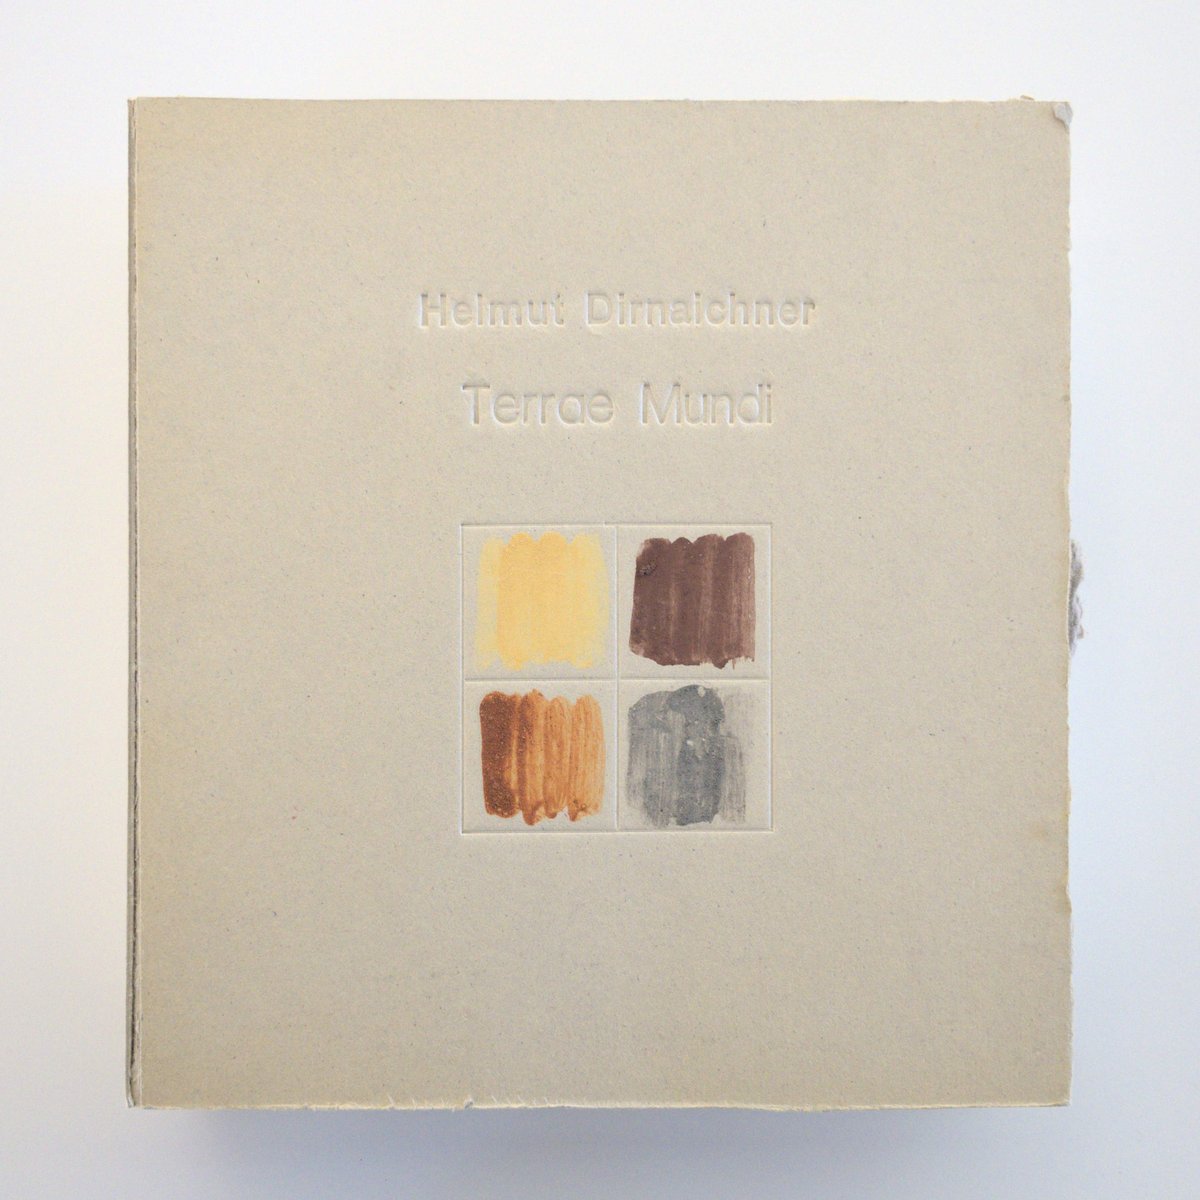 book front cover view: helmut dirnaichner, &quot;terrae mundi&quot; (2002), cardboard, 23 x 23 cm